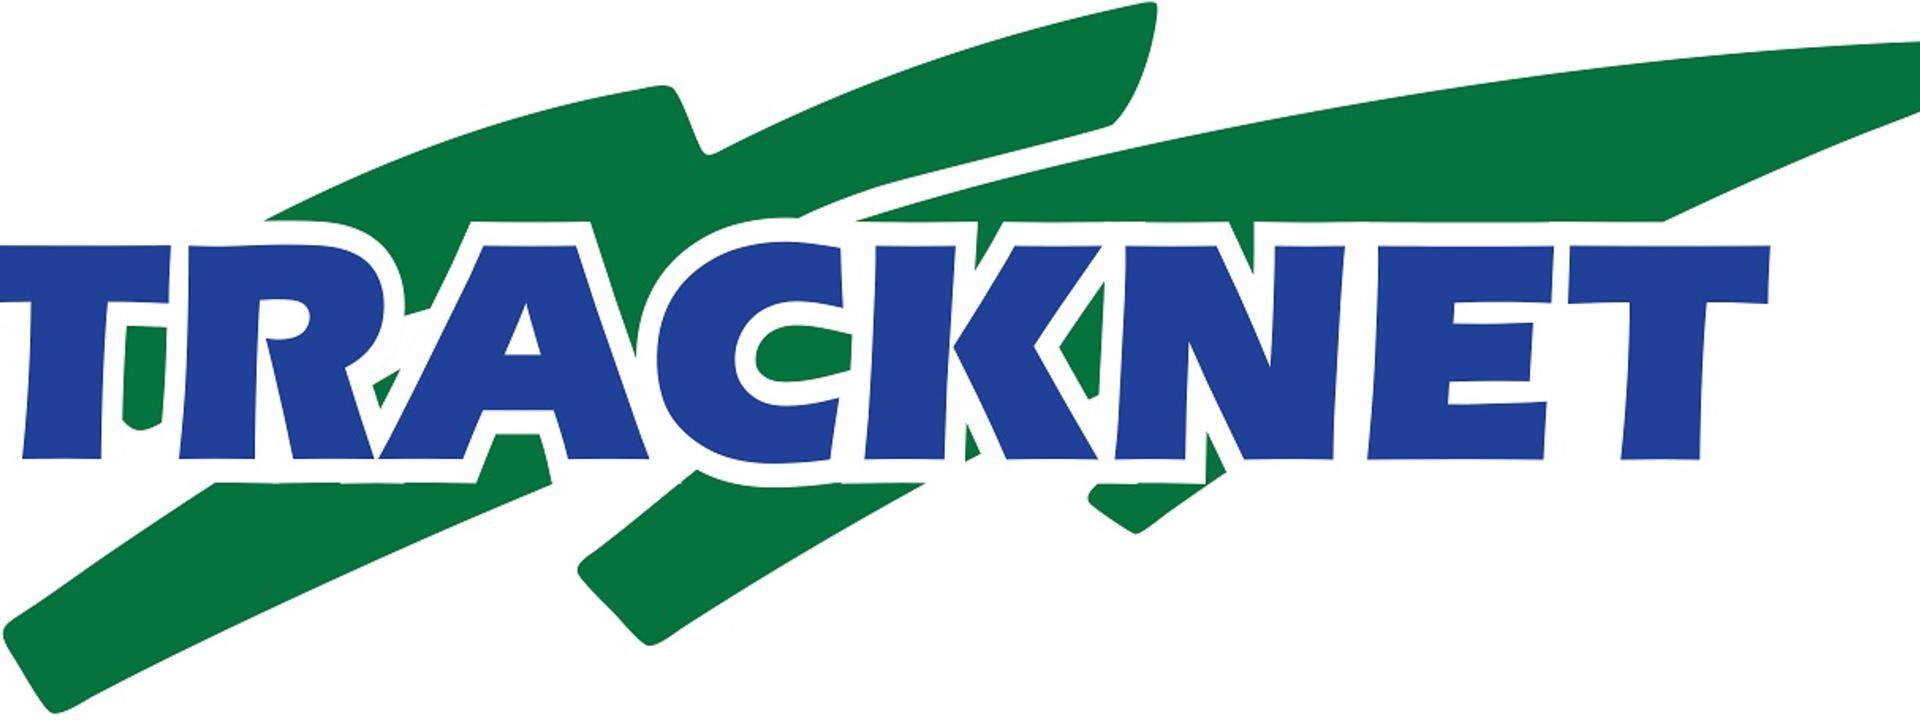 tracknet-logo.jpg